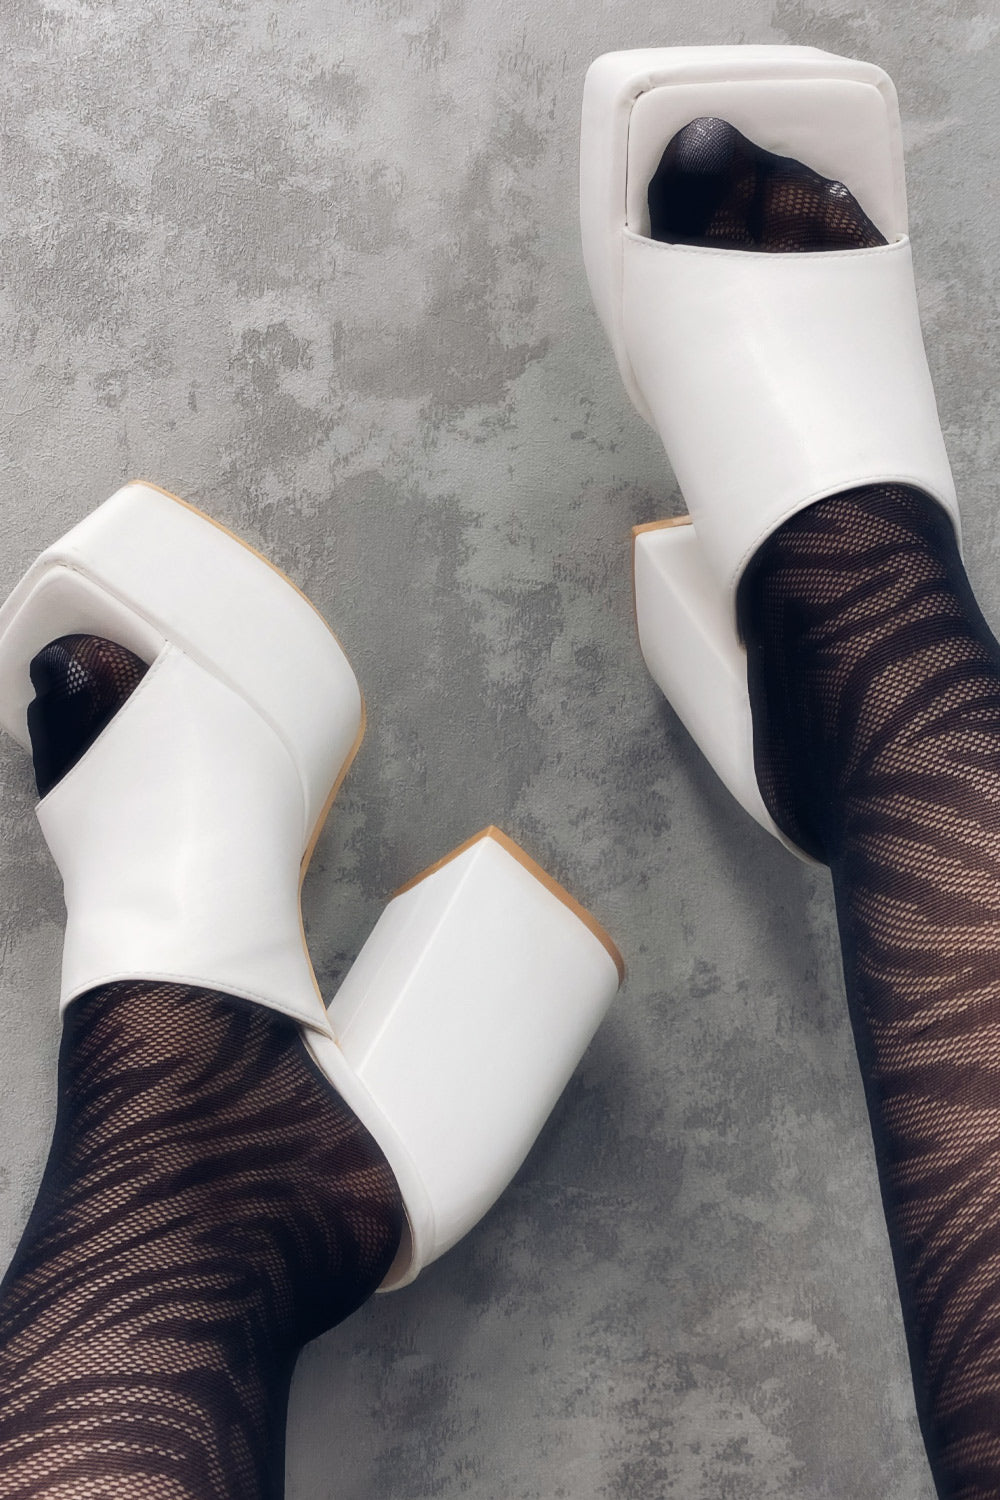 White Open Toe Platform Heel